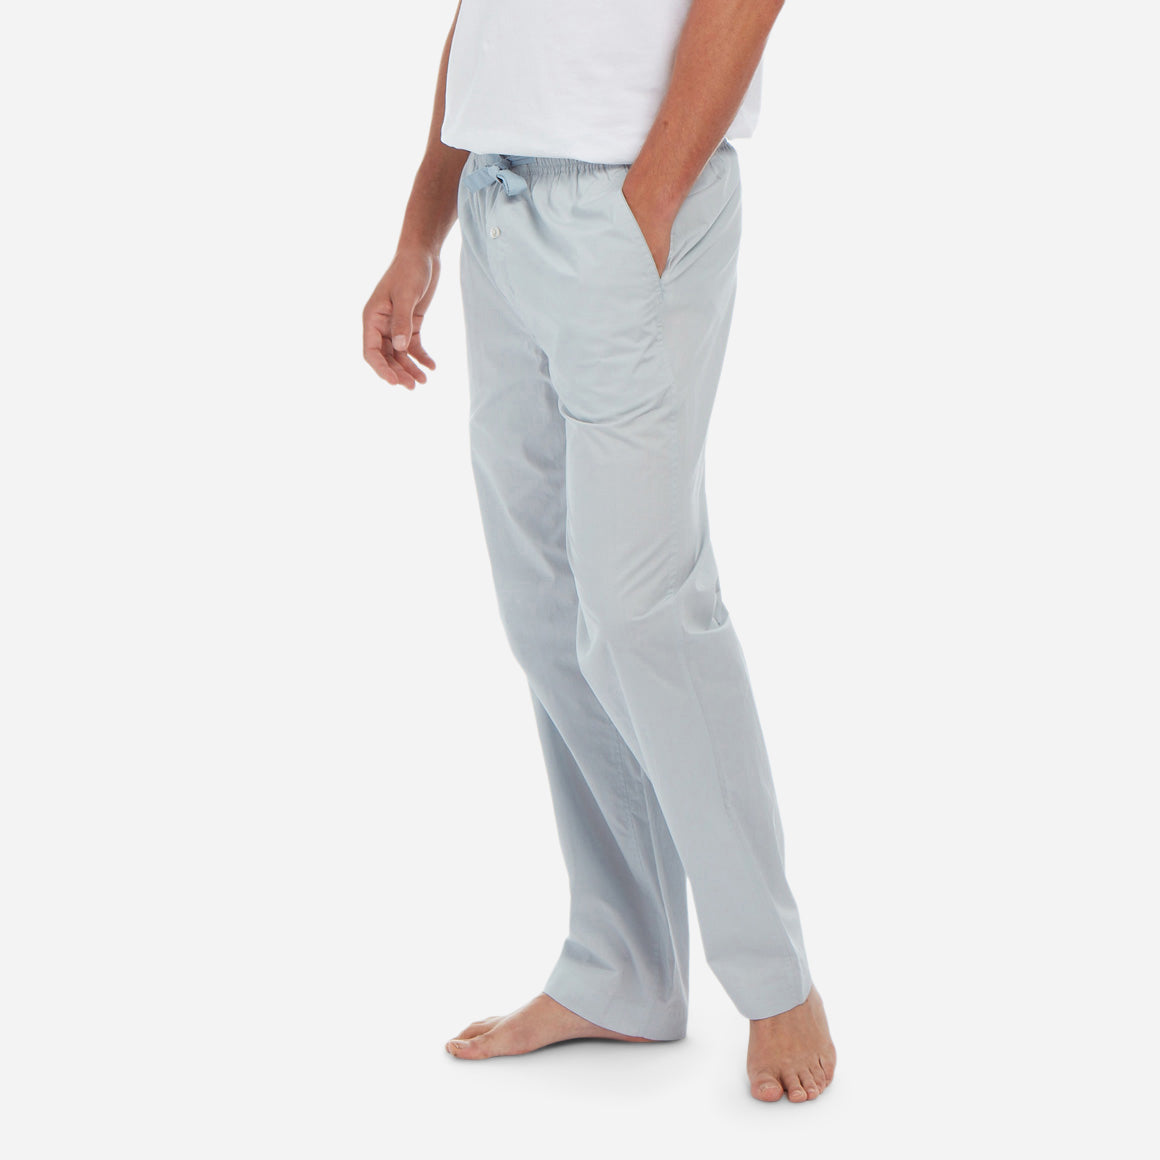 NWT Bundle Sleep Pajama Lounge Soft Smooth Lightweight Pants